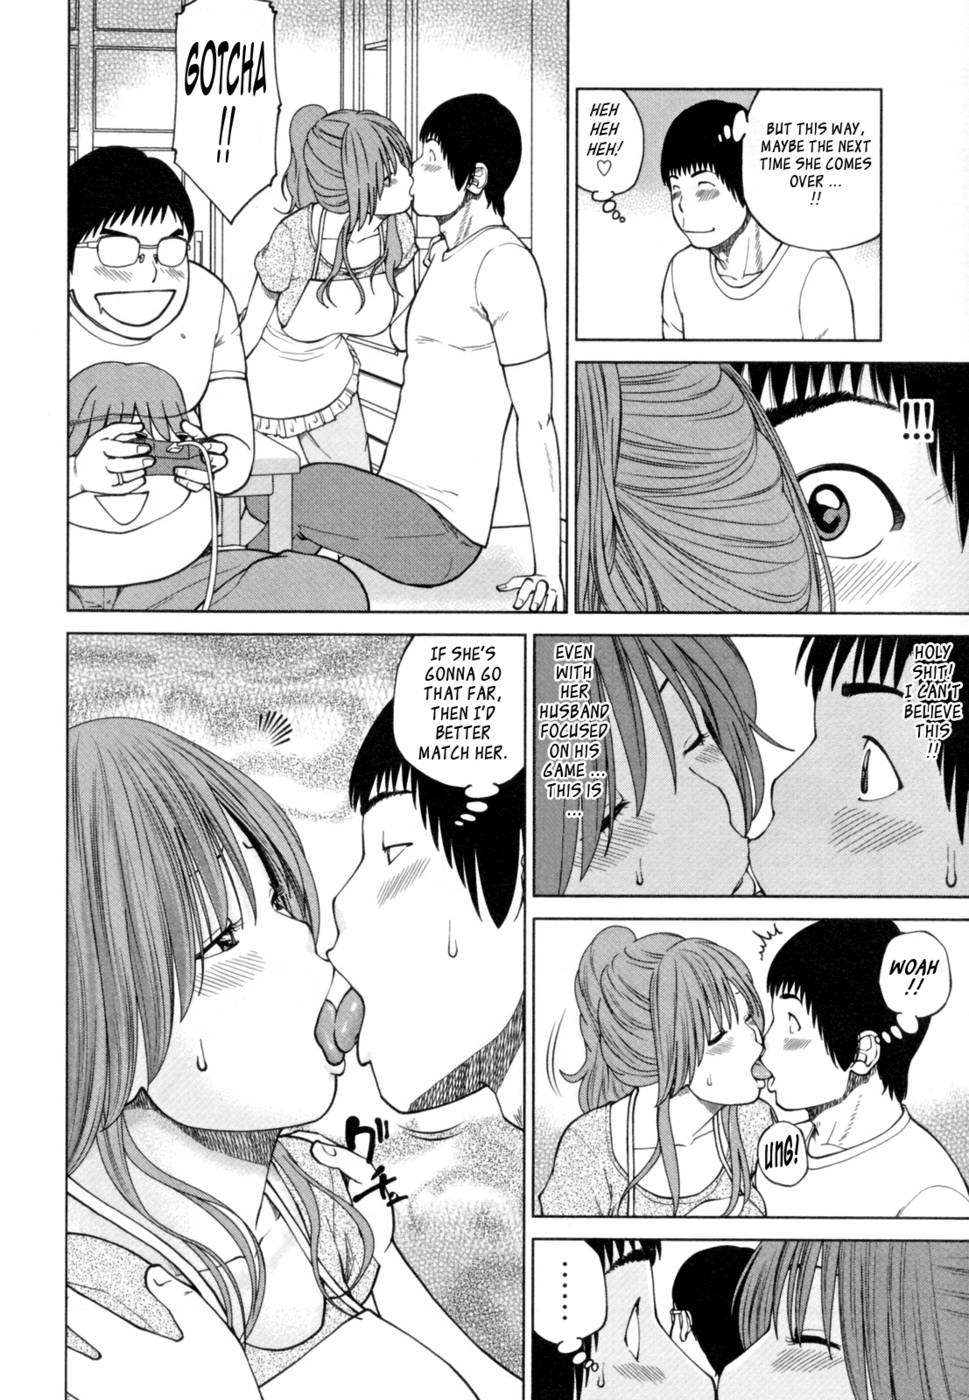 32 Year Old Unsatisfied Wife-Chapter 10-The Wife Next Door-Hentai Manga Hentai Comic